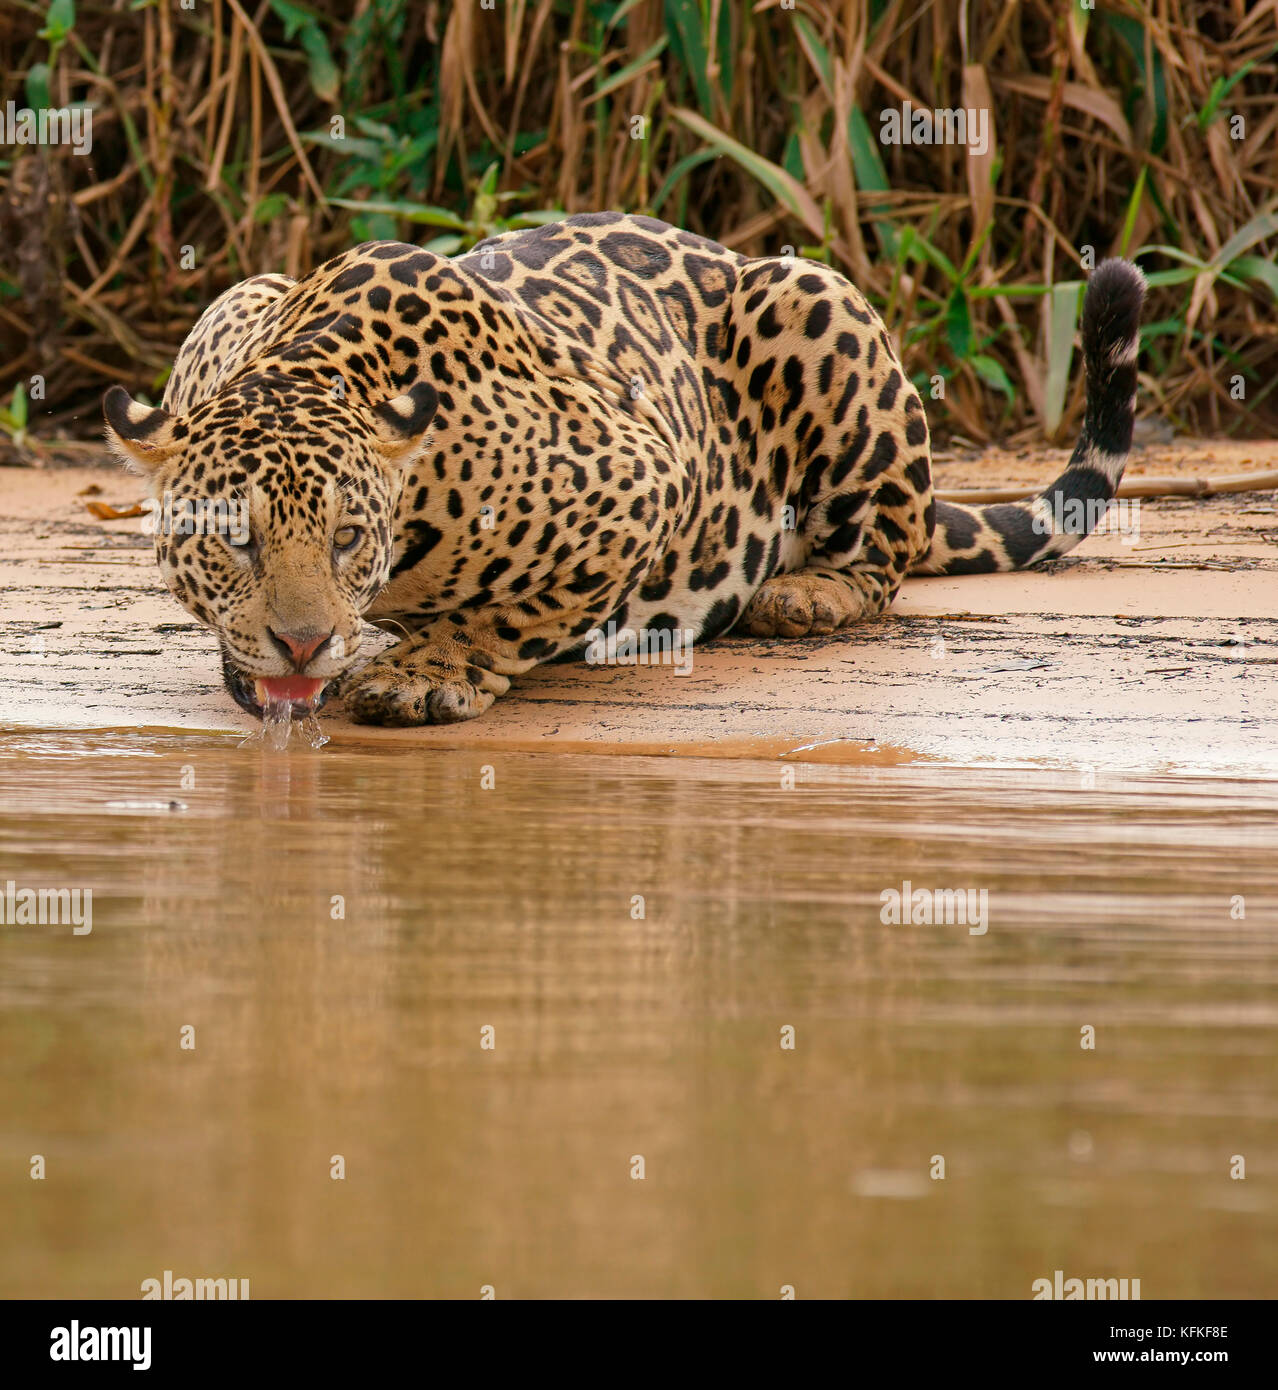 Jaguar (Panthera onca) bevande presso il fiume, Pantanal, Mato Grosso, brasile Foto Stock